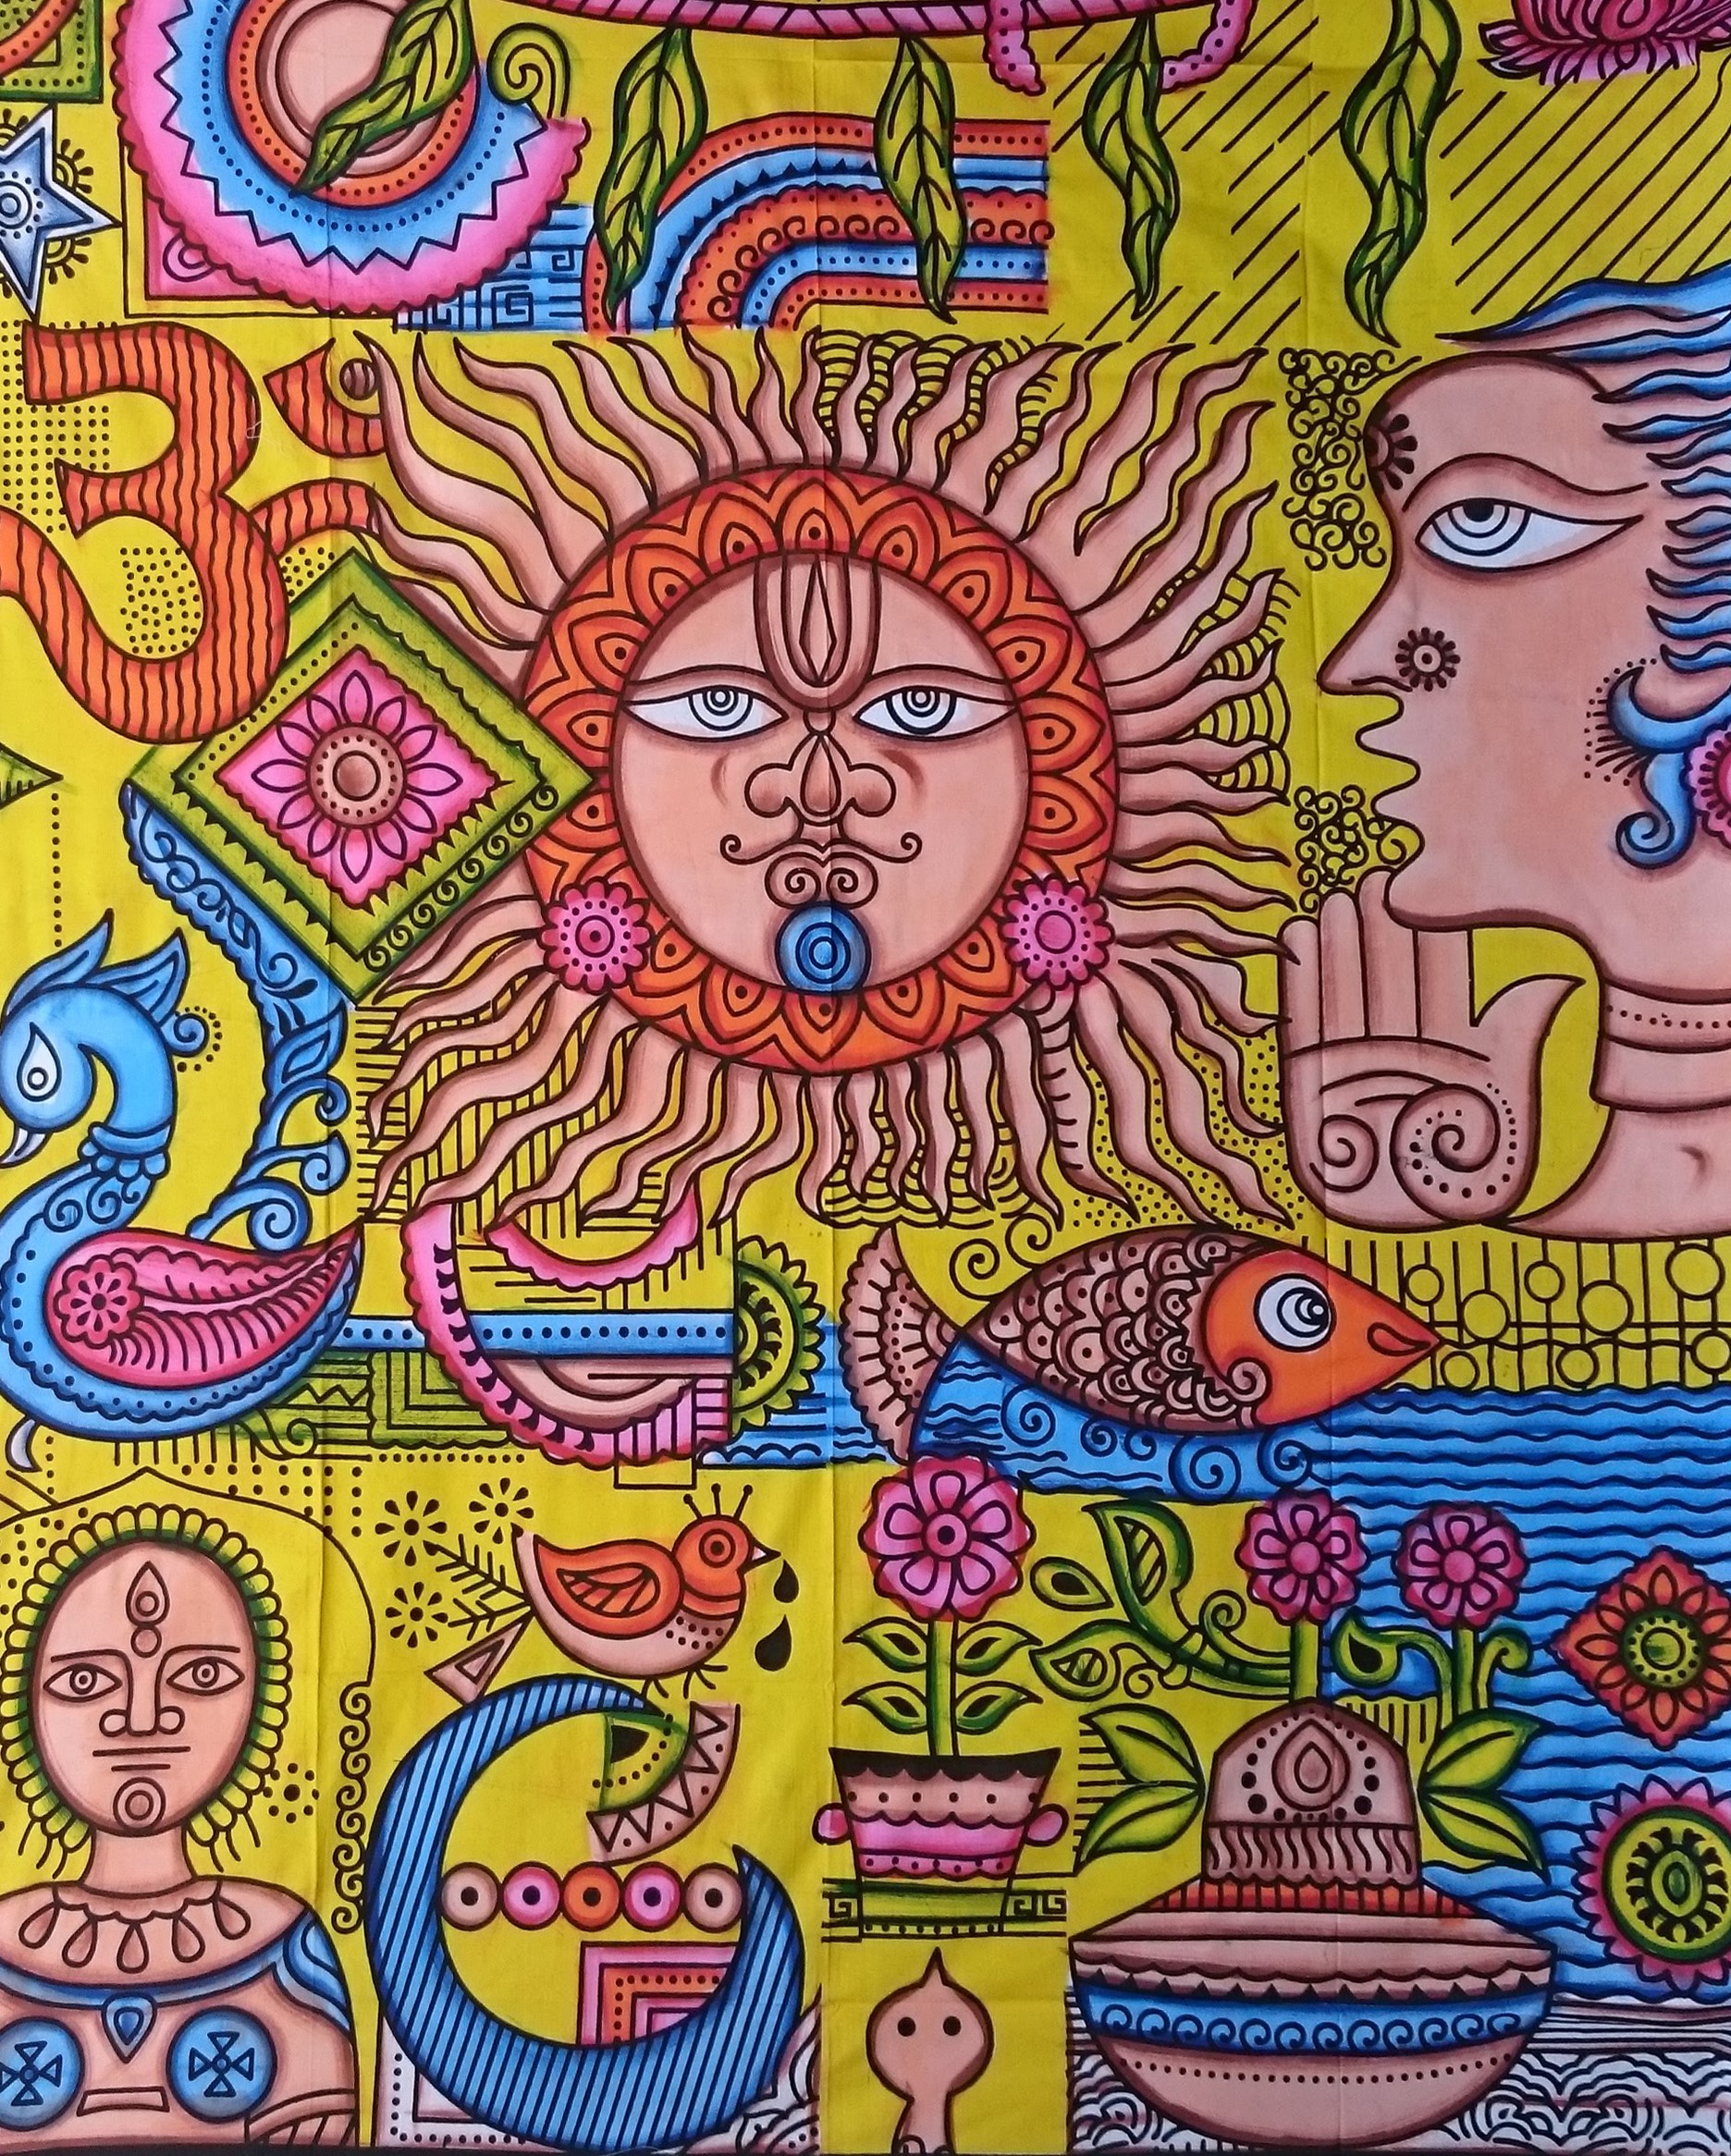 Single Sun Tapestry (B111)